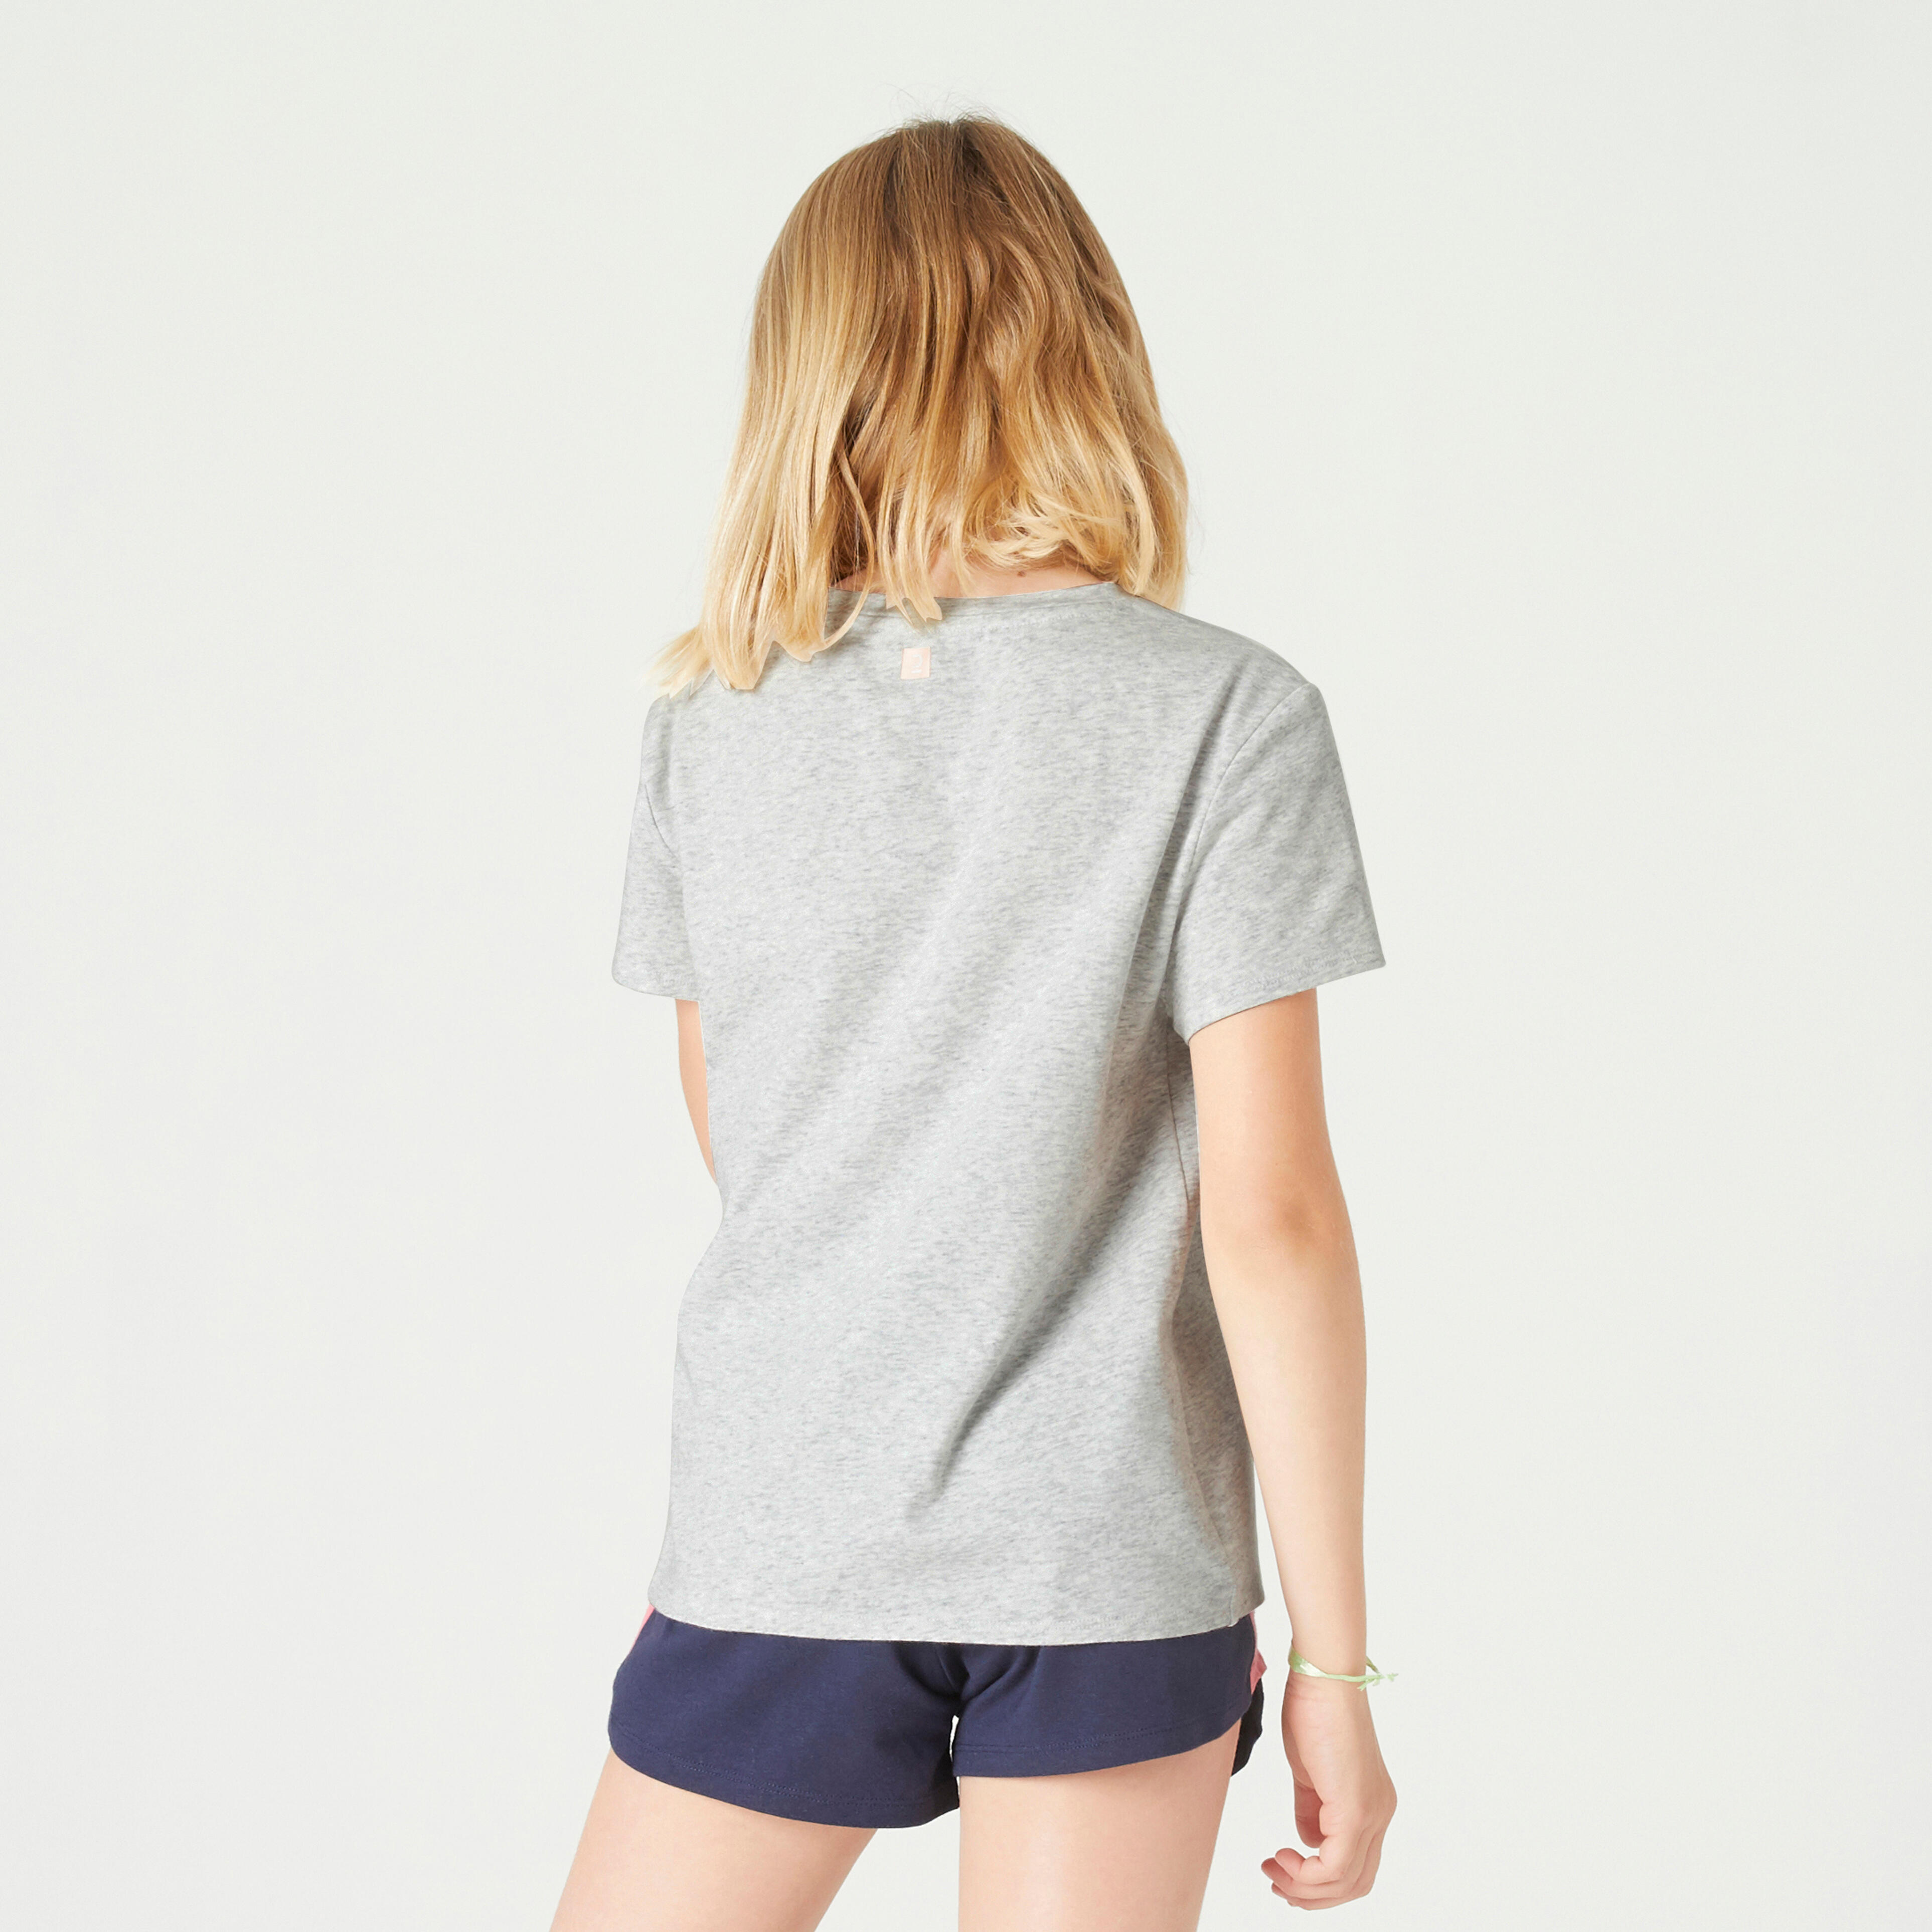 500 Gym Short-Sleeved T-Shirt - Girls - DOMYOS